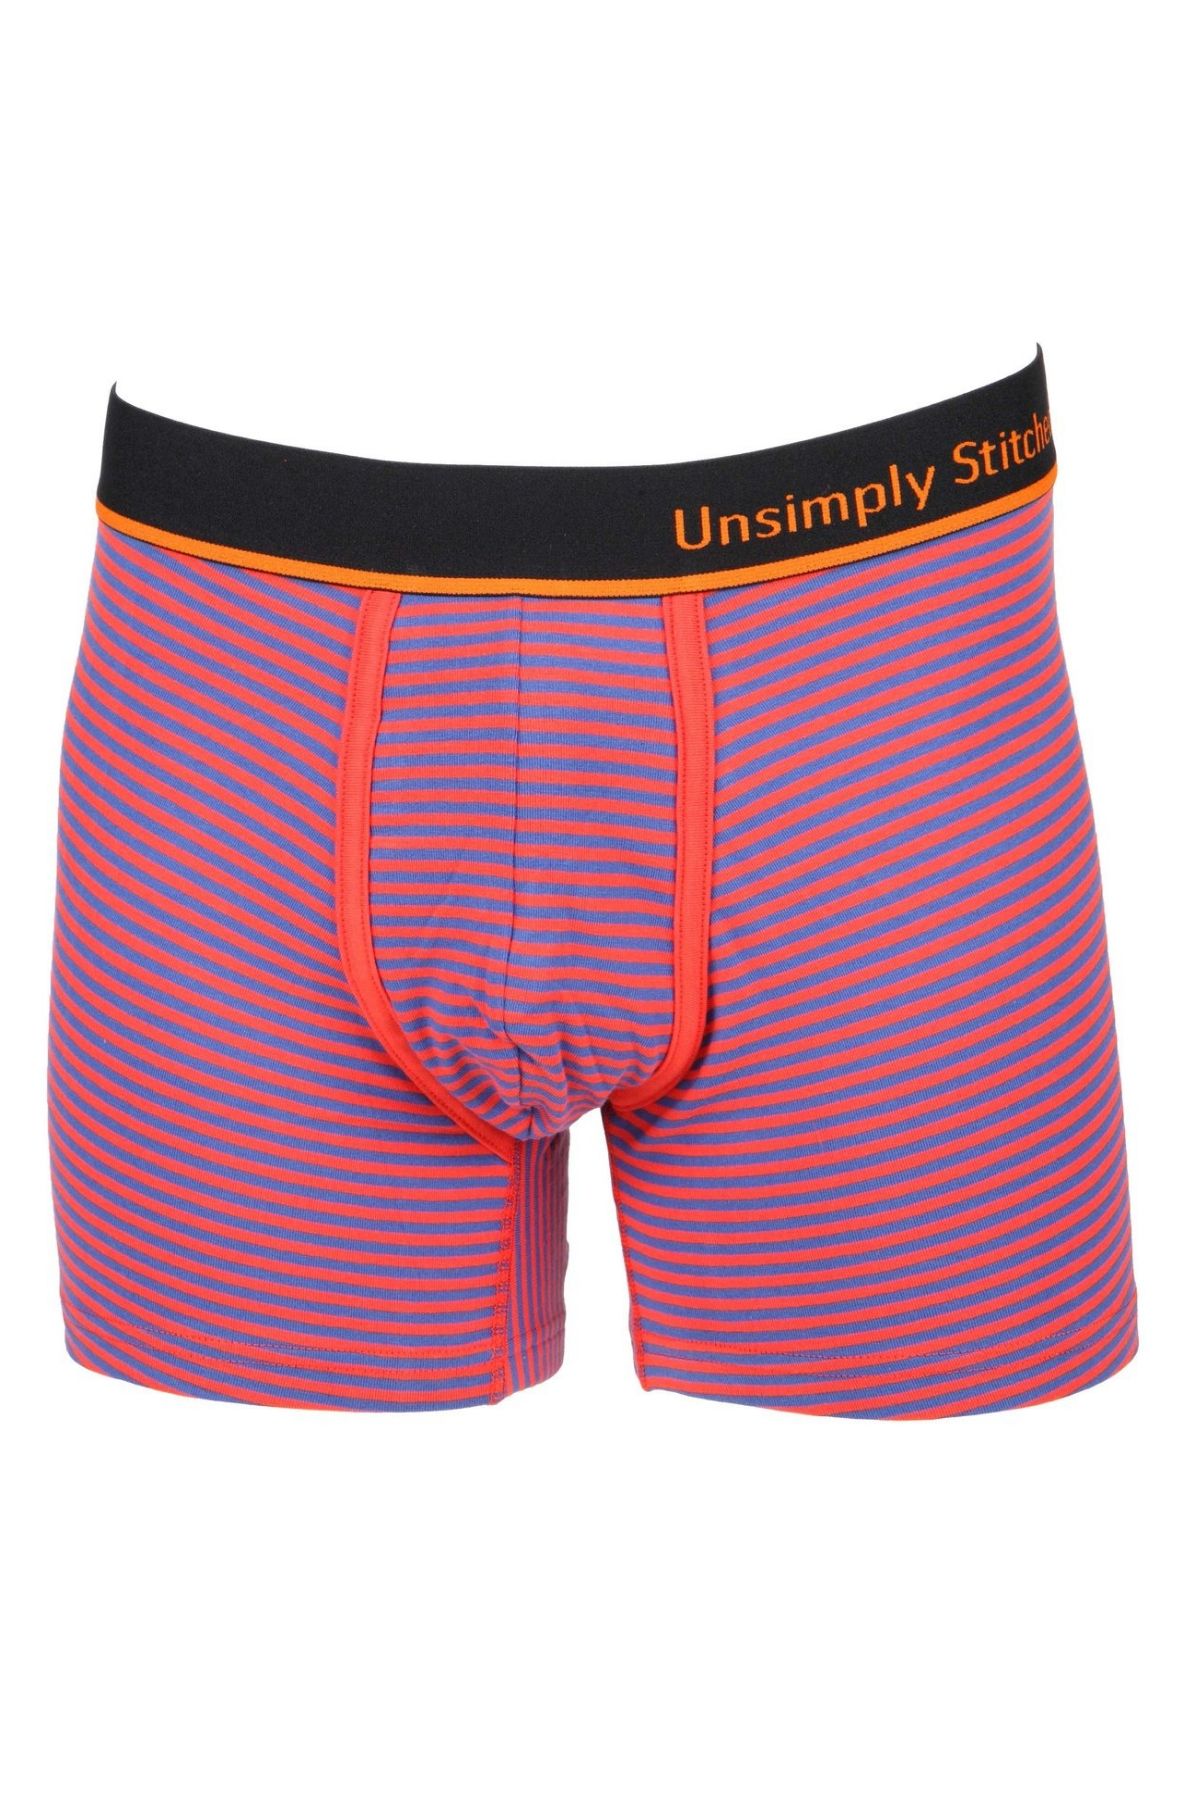 Unsimply Stitched Orange/Blue Sailor-Stripe Boxer Brief